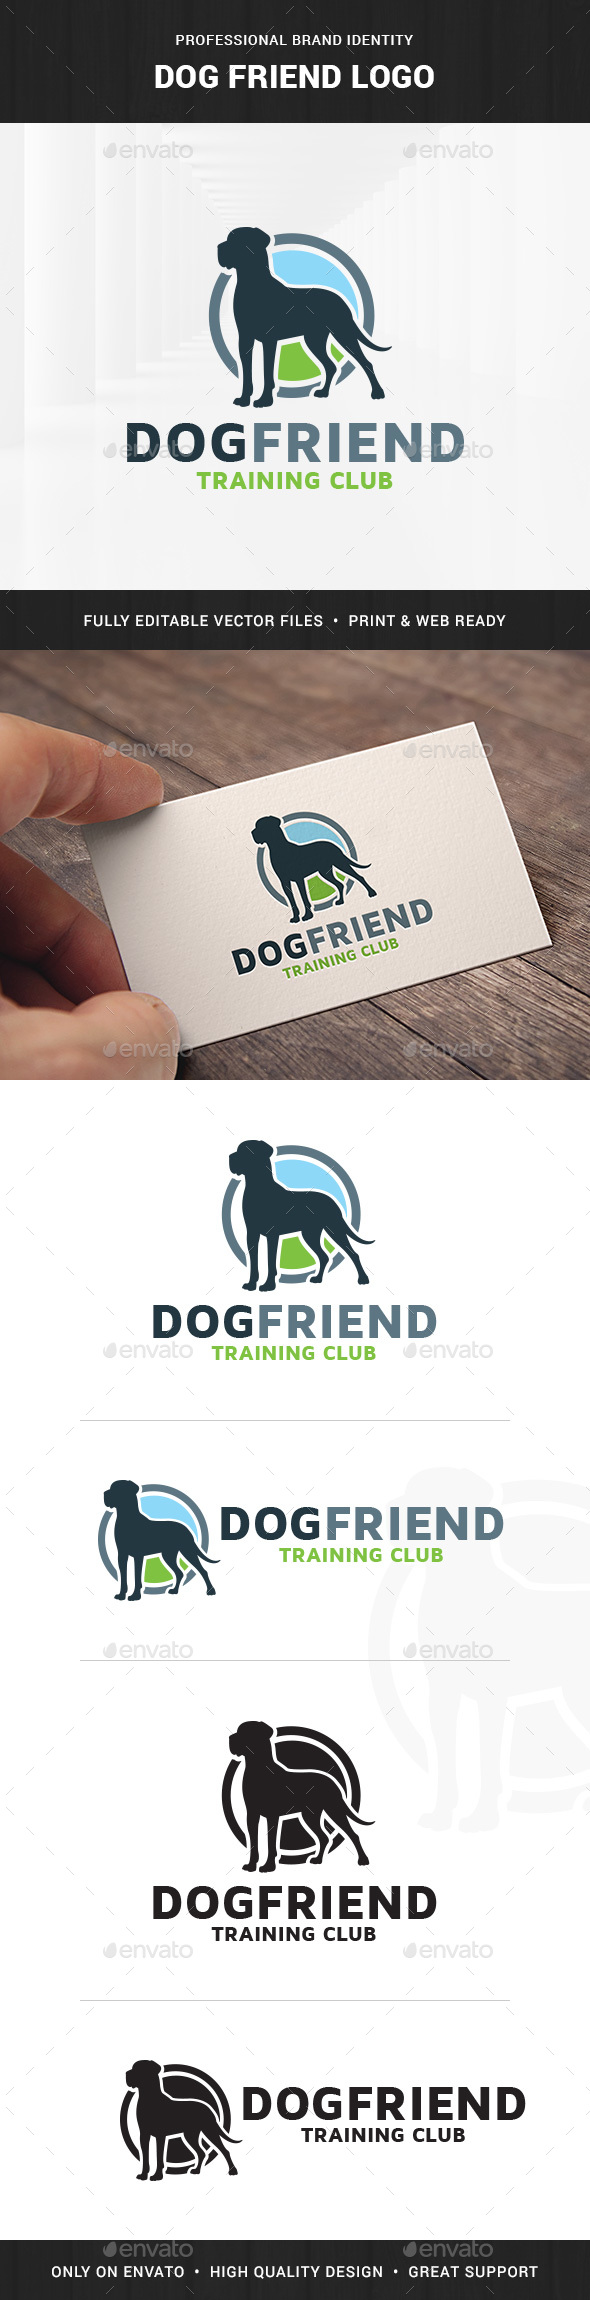 Dog Friend Logo Template